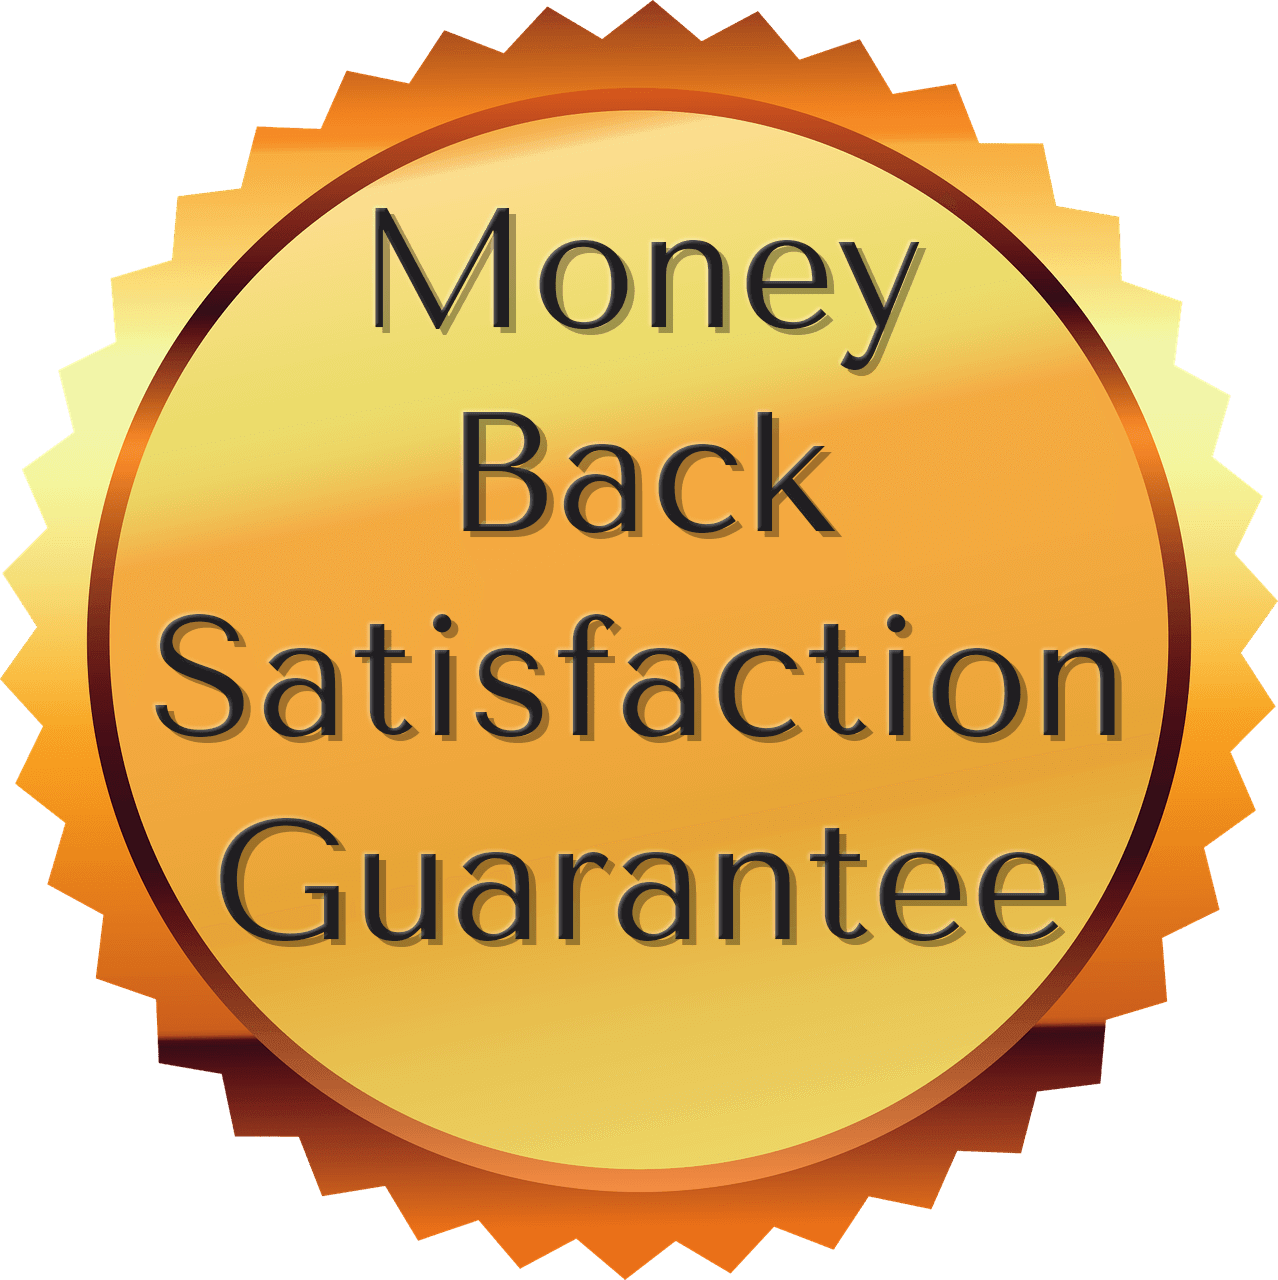 Money Back Satisfaction Guarantee Seal